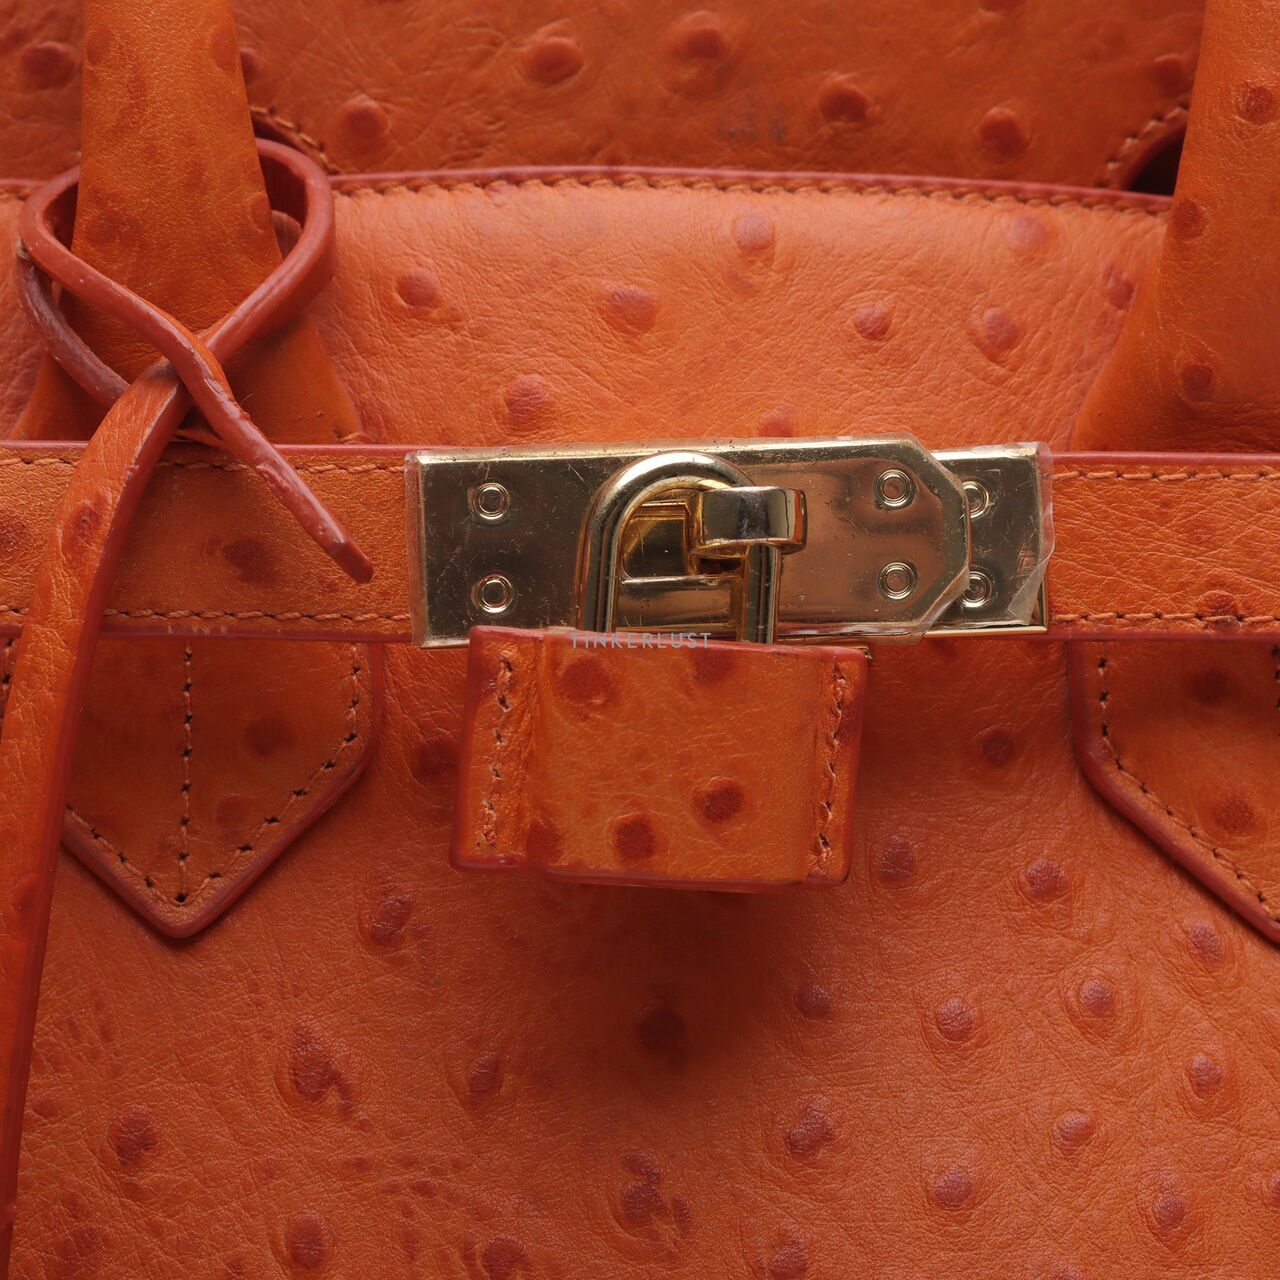 Gobelini Orange Birkin Handbag